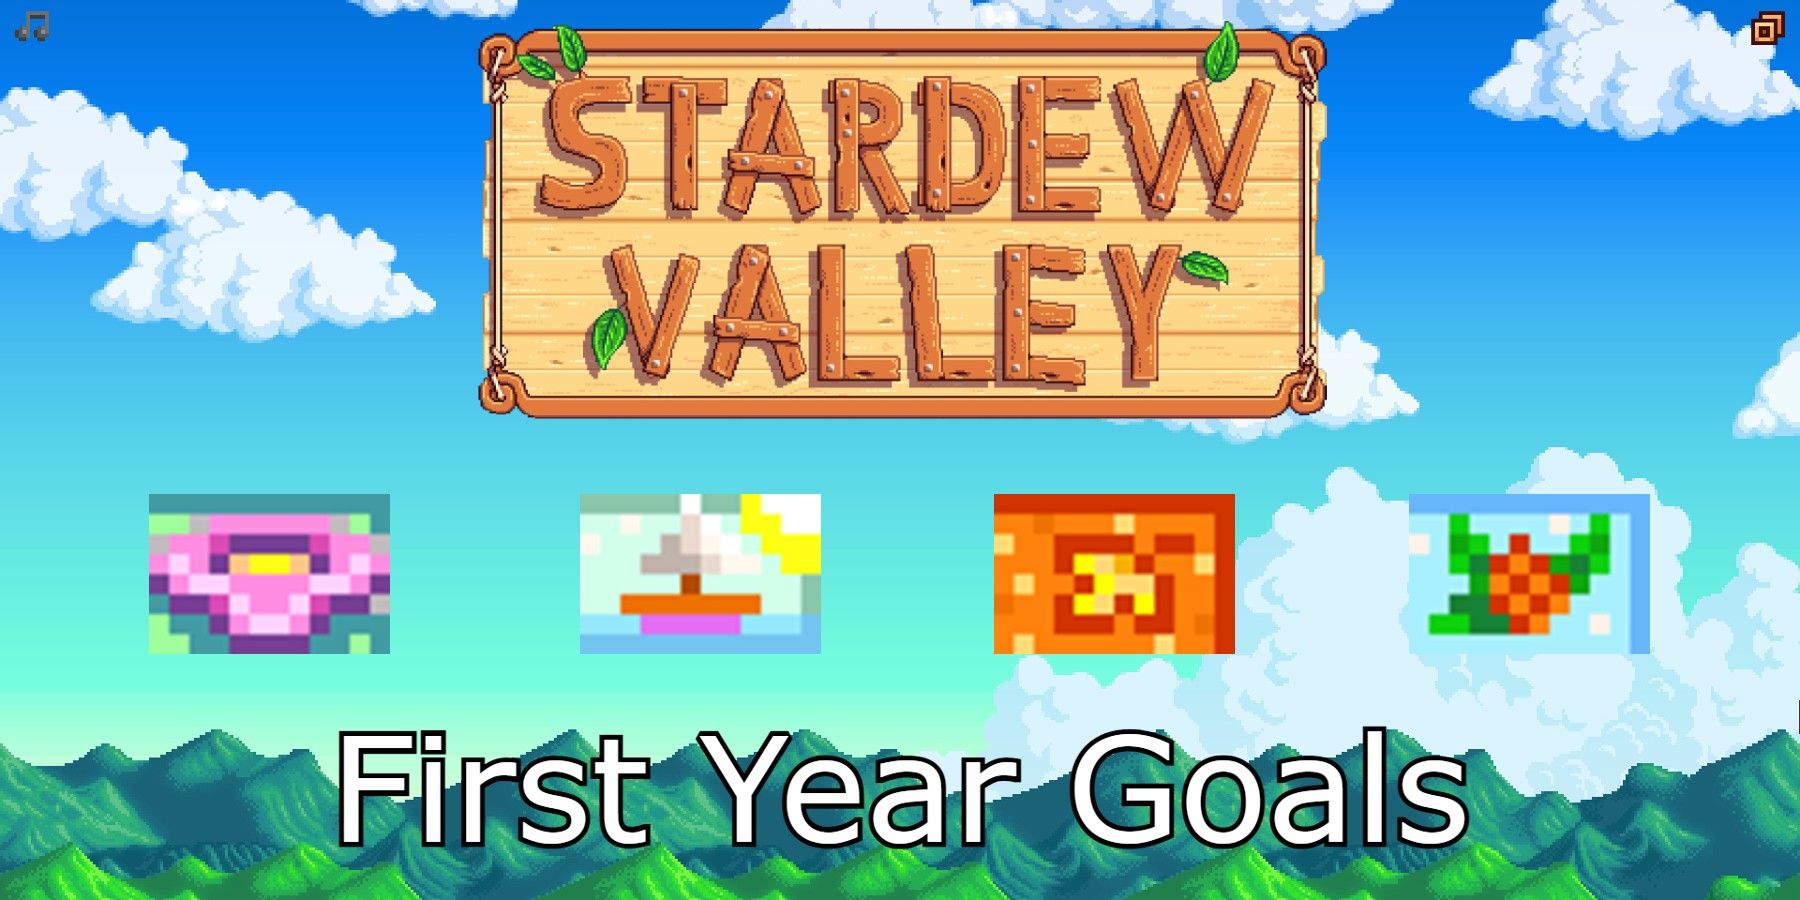 stardew valley logo and seasons